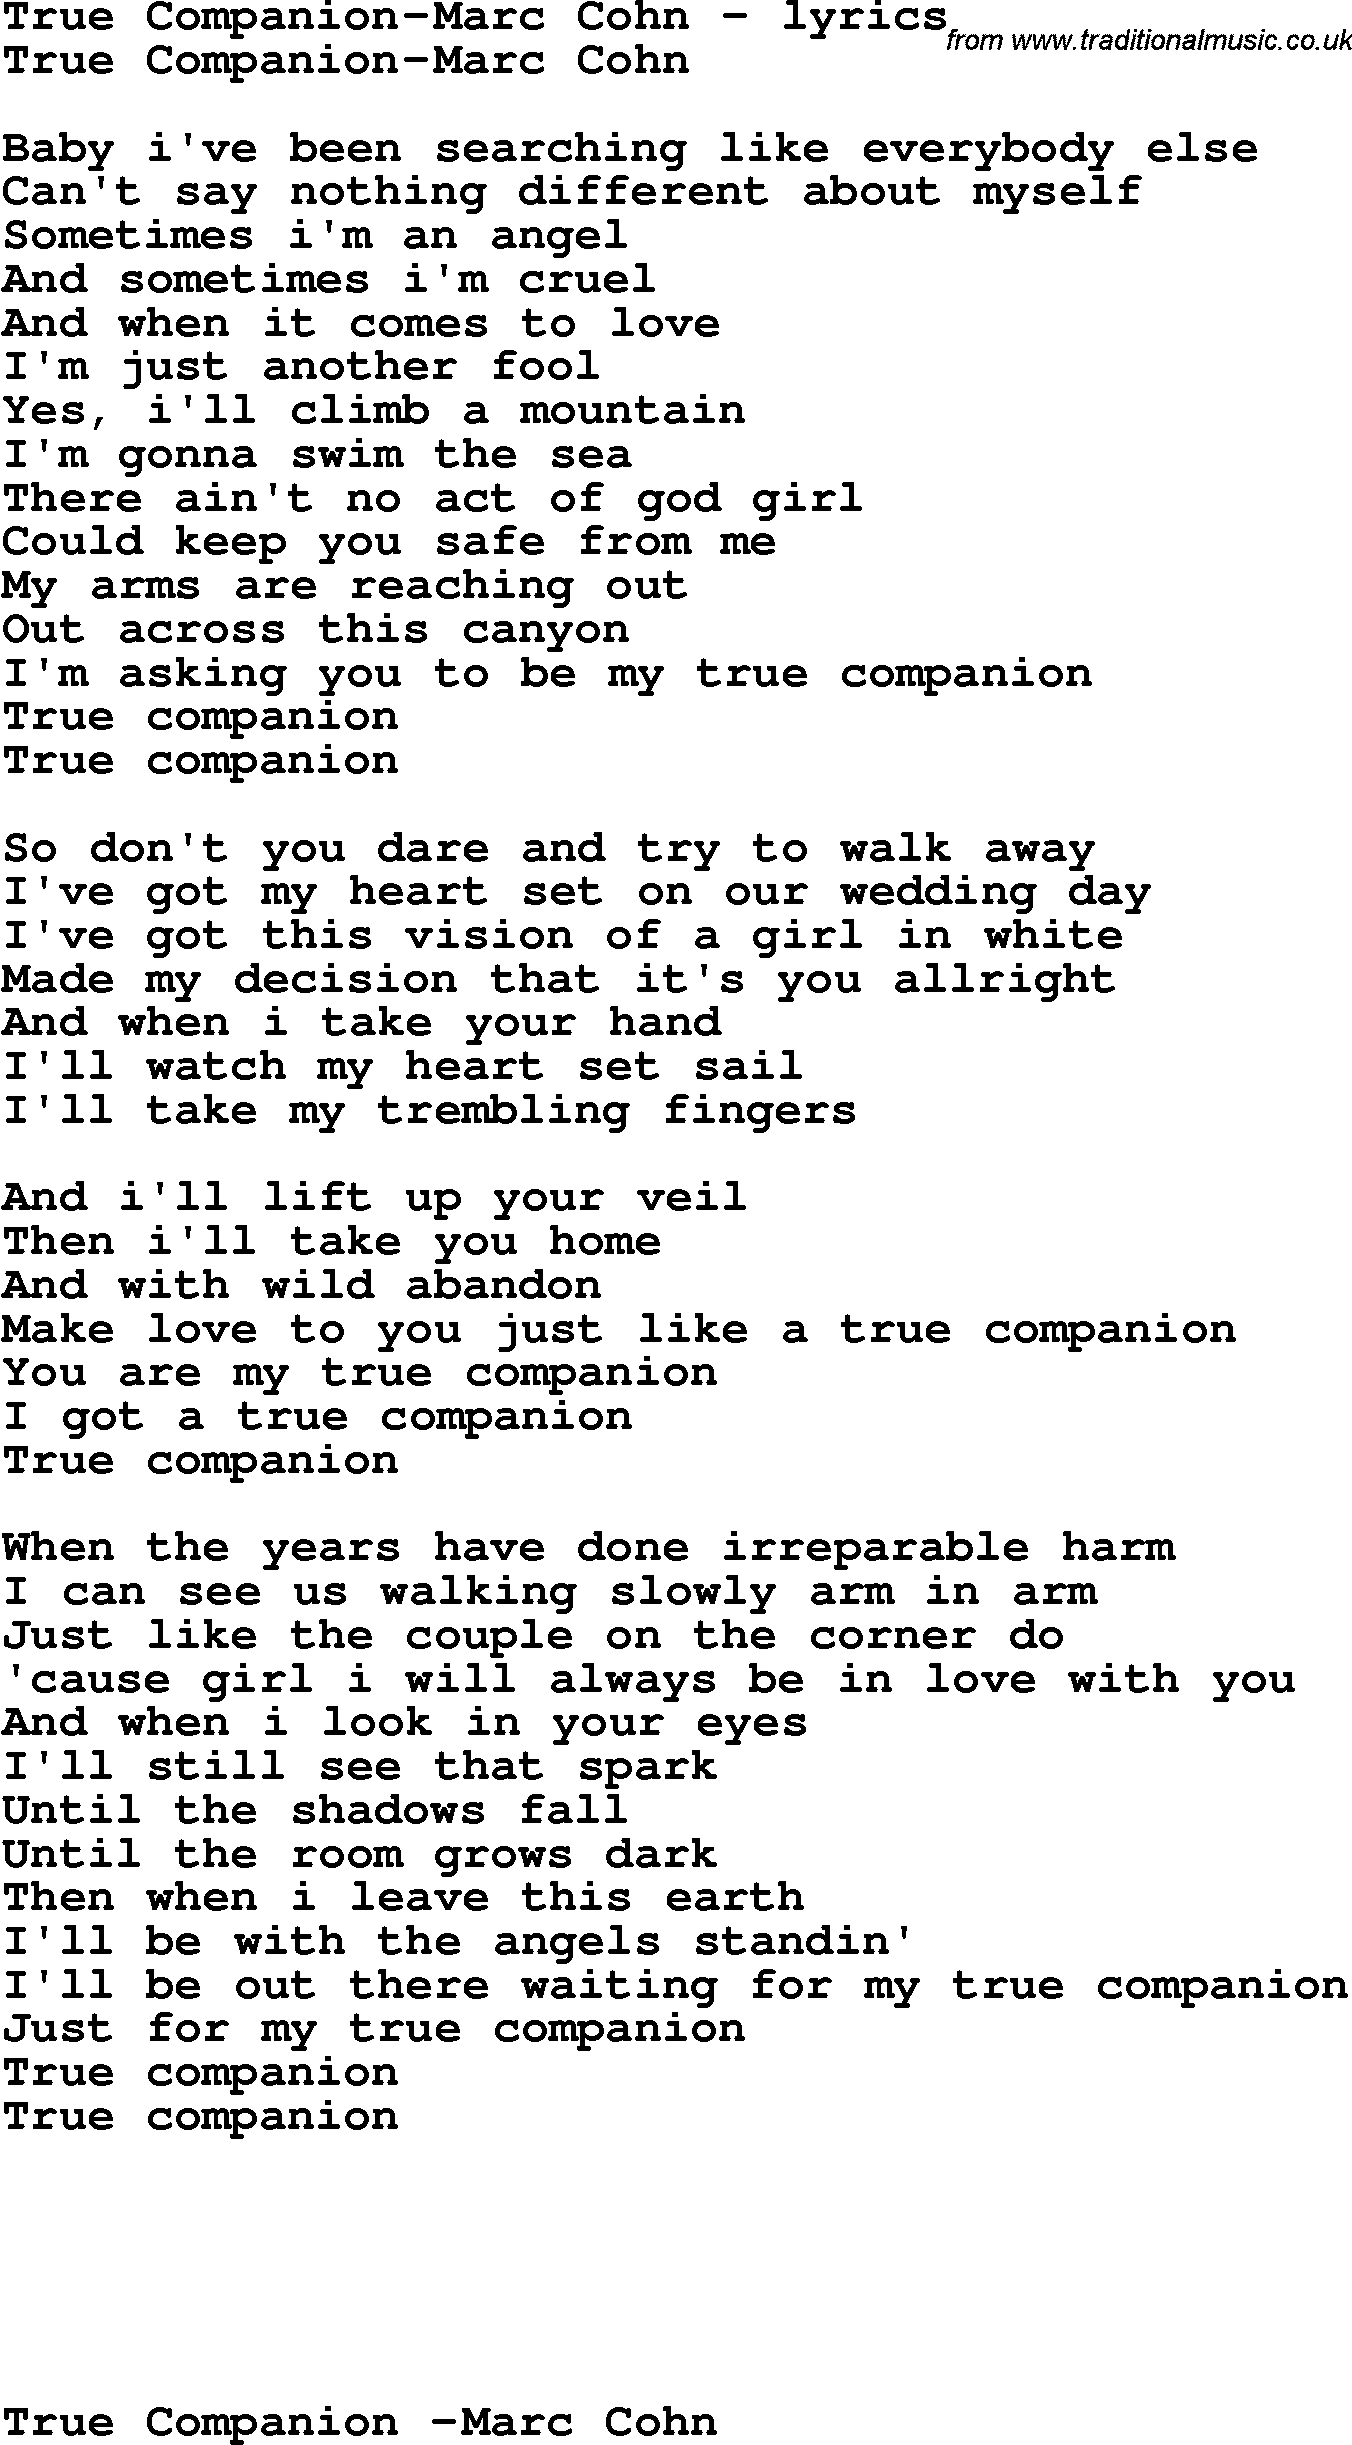 Love Song Lyrics for: True Companion-Marc Cohn